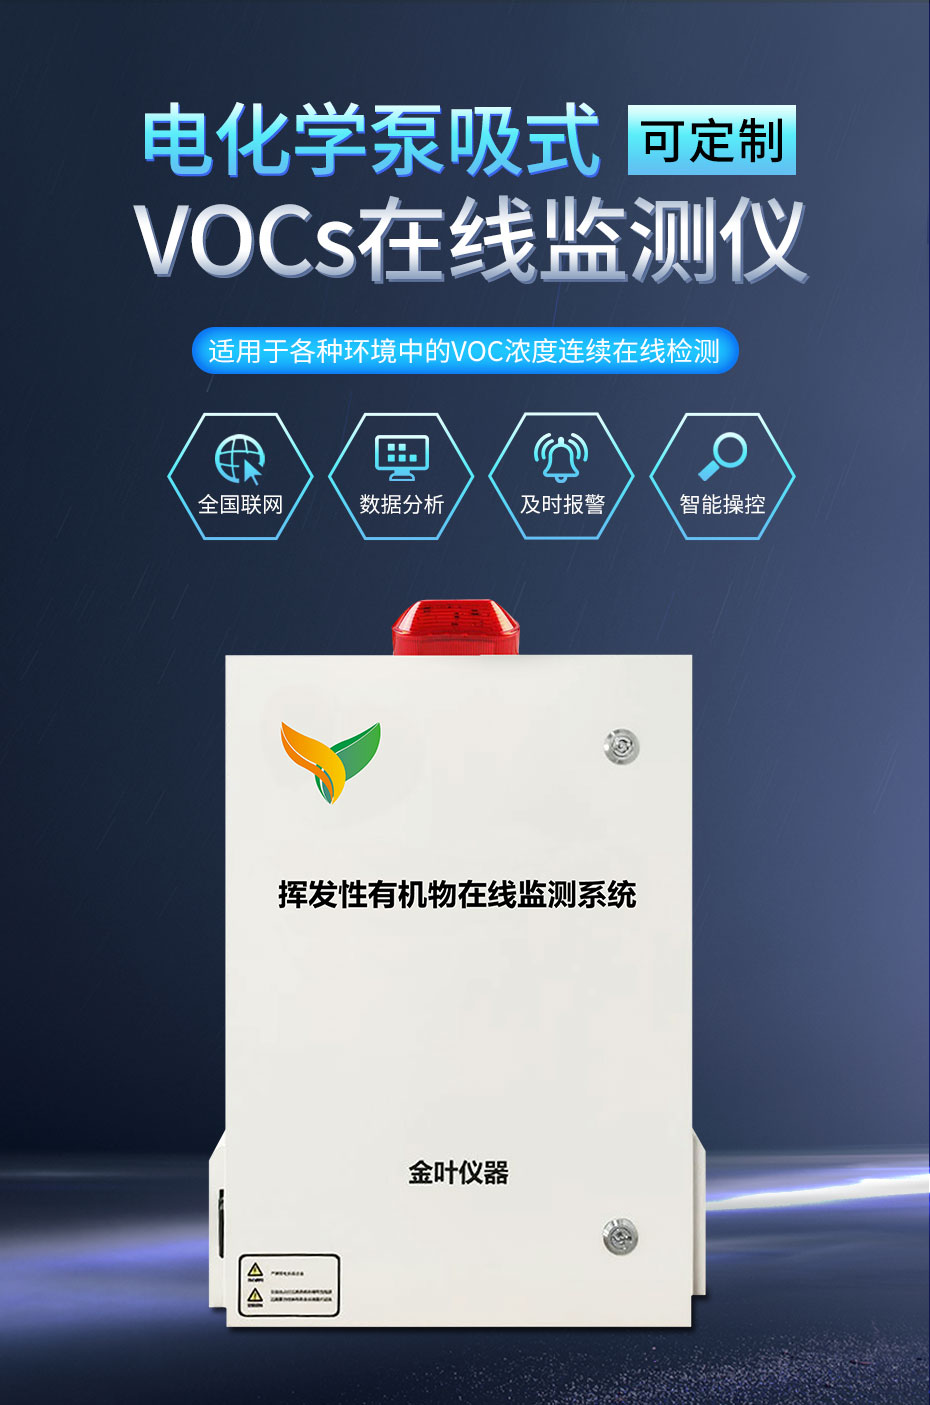 vocs在线监测仪在voc污染治理中的应用优势